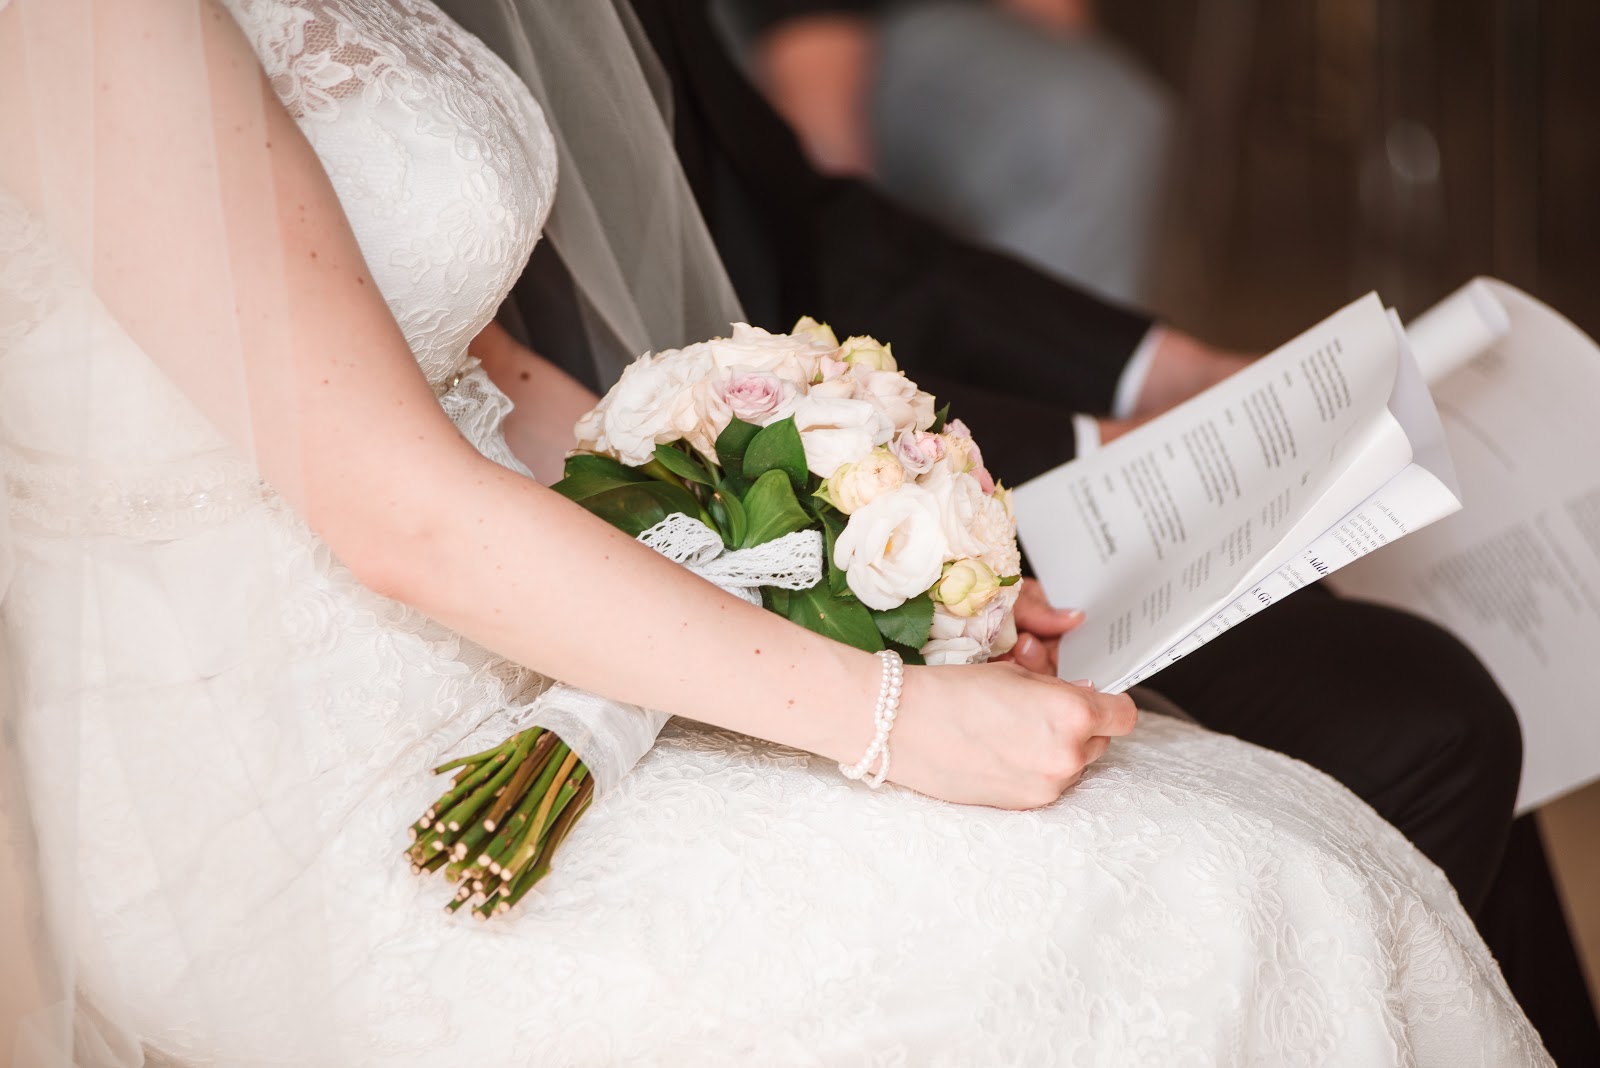 Wedding readings for blended families